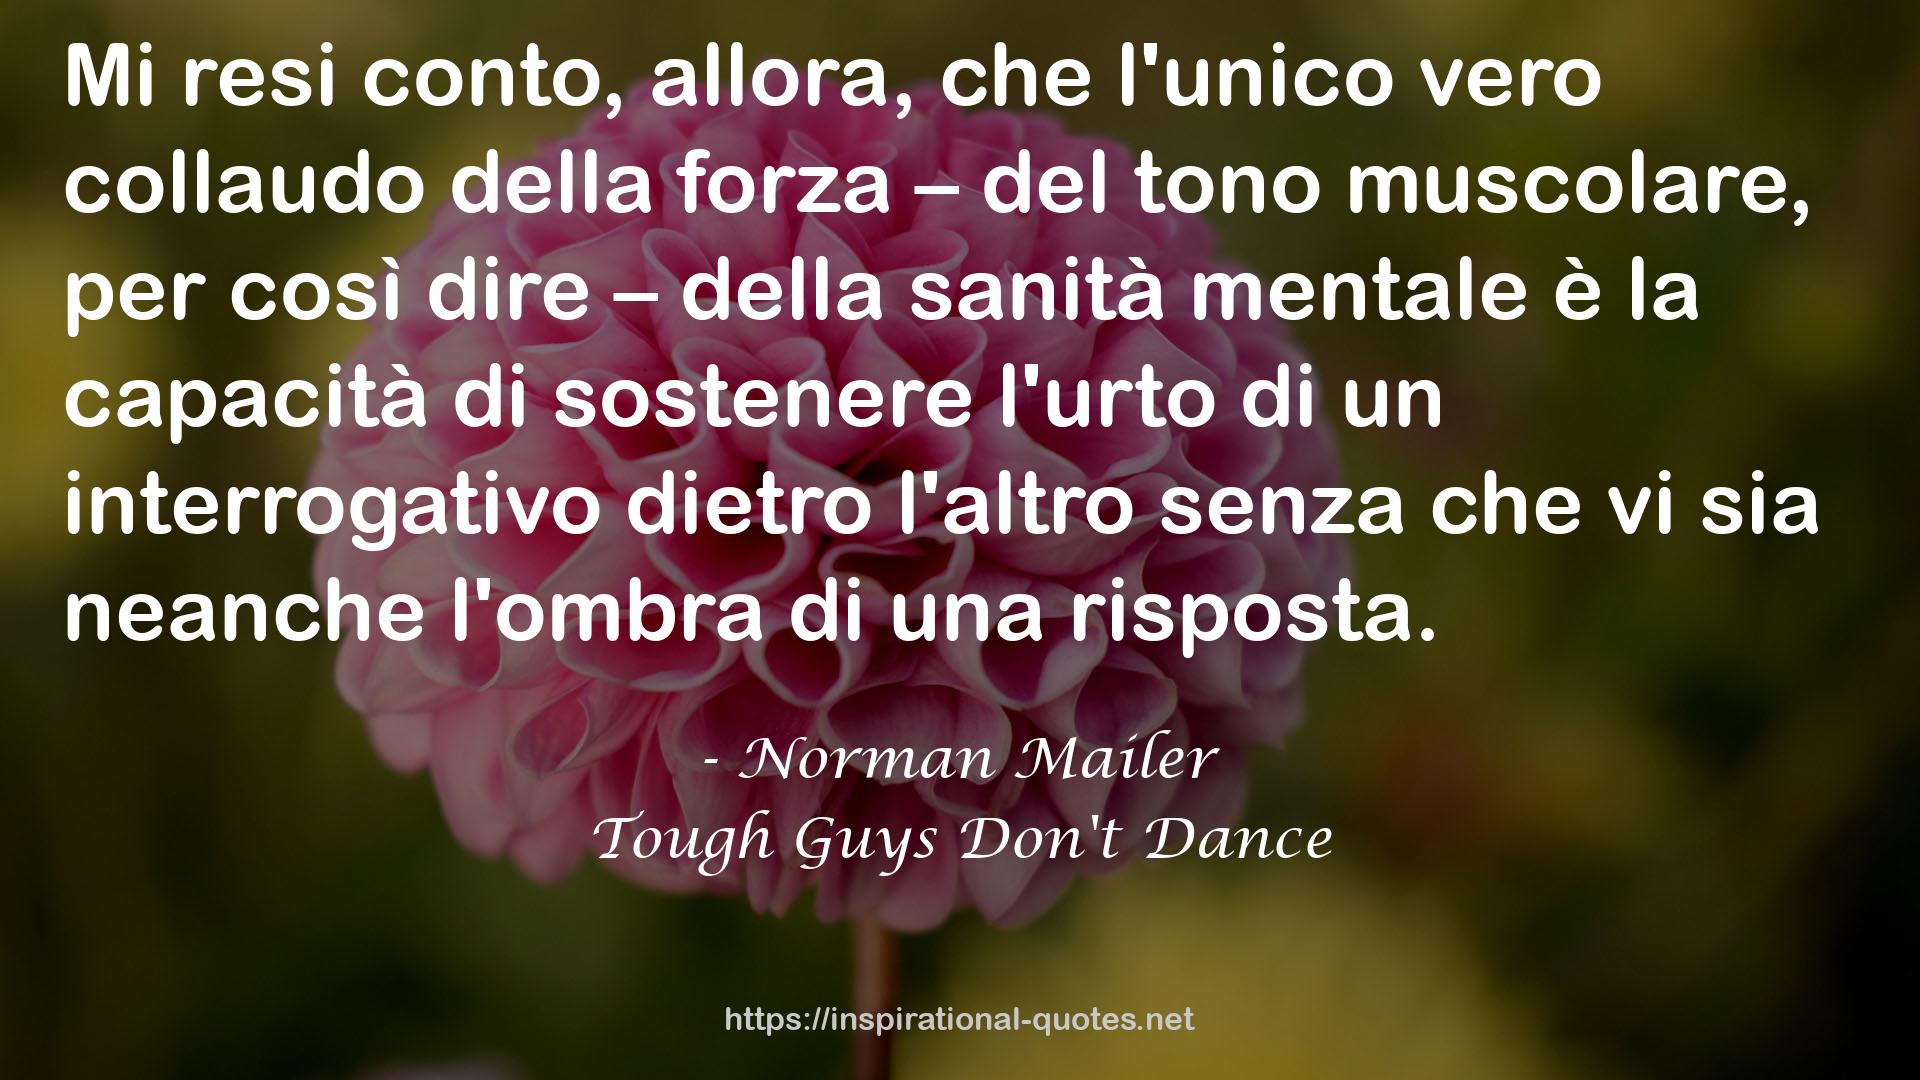 Tough Guys Don't Dance QUOTES